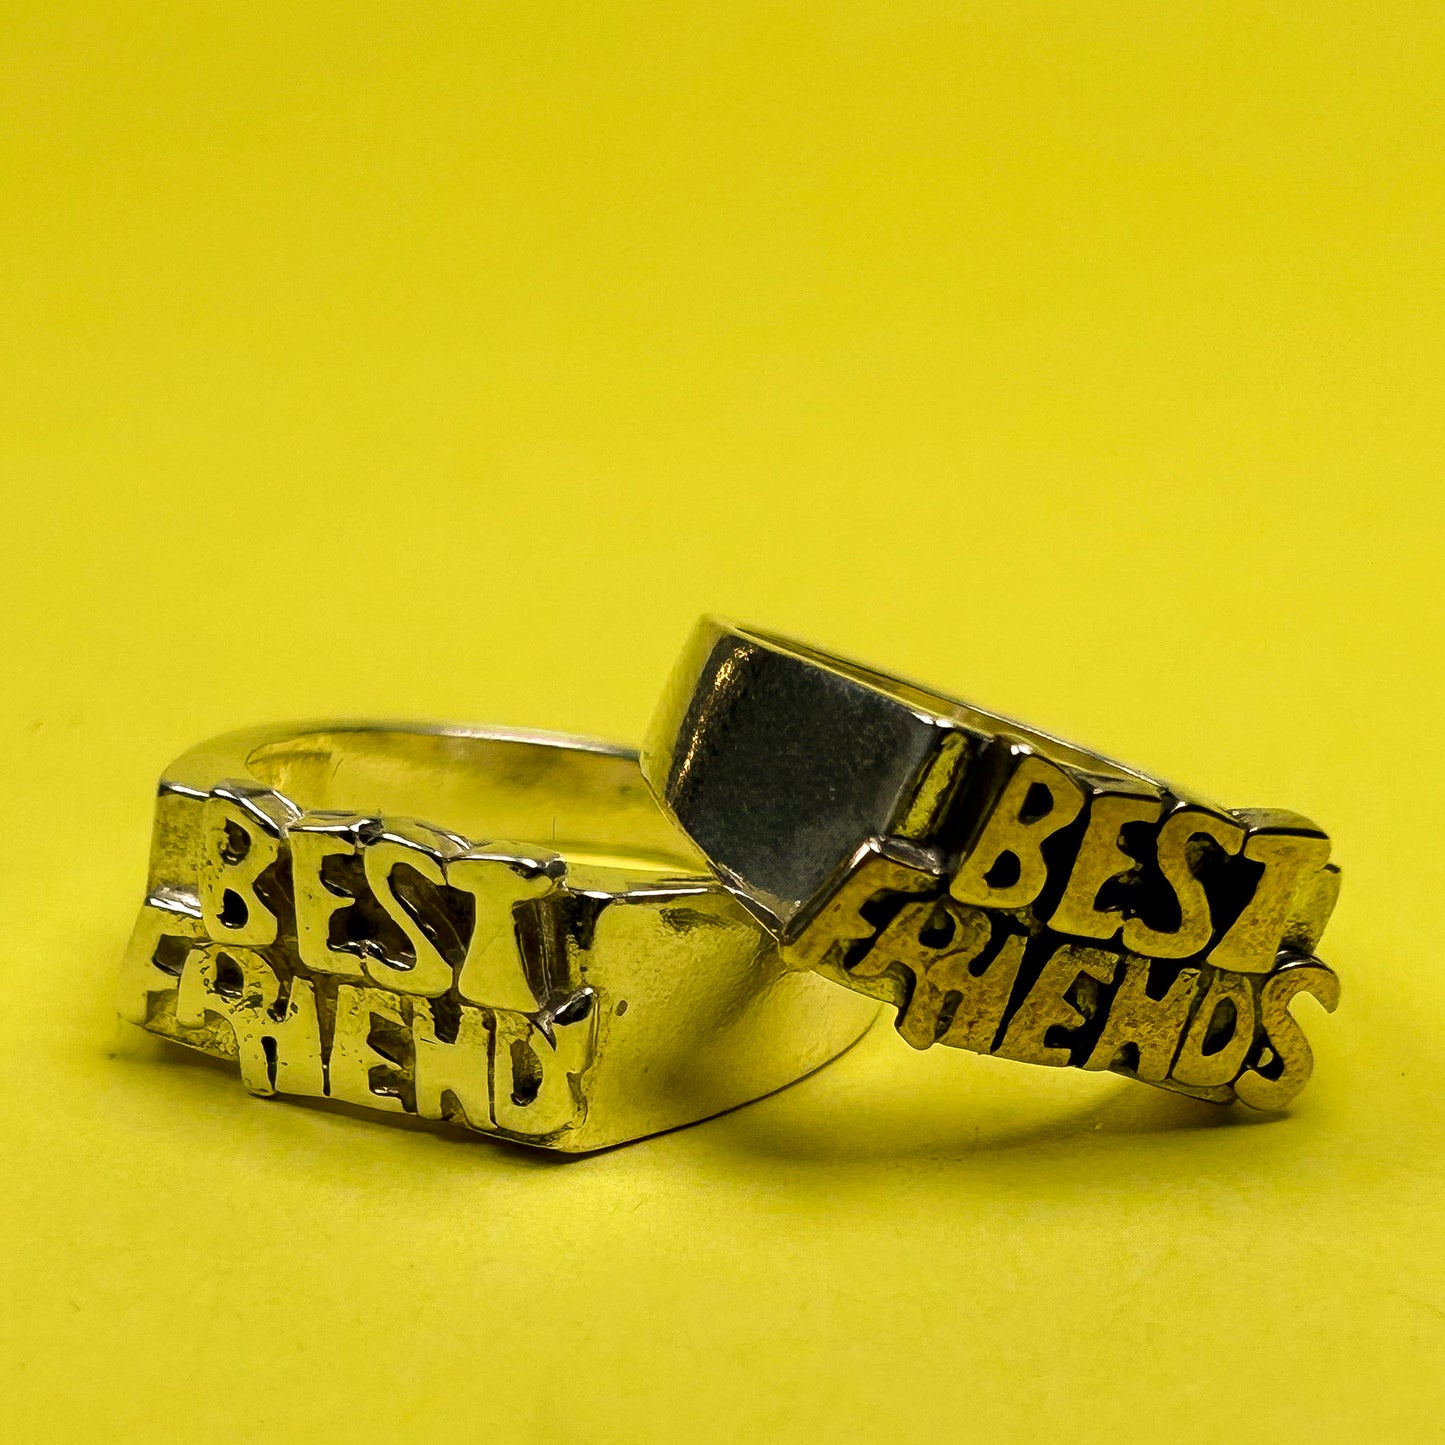 Best friends ring